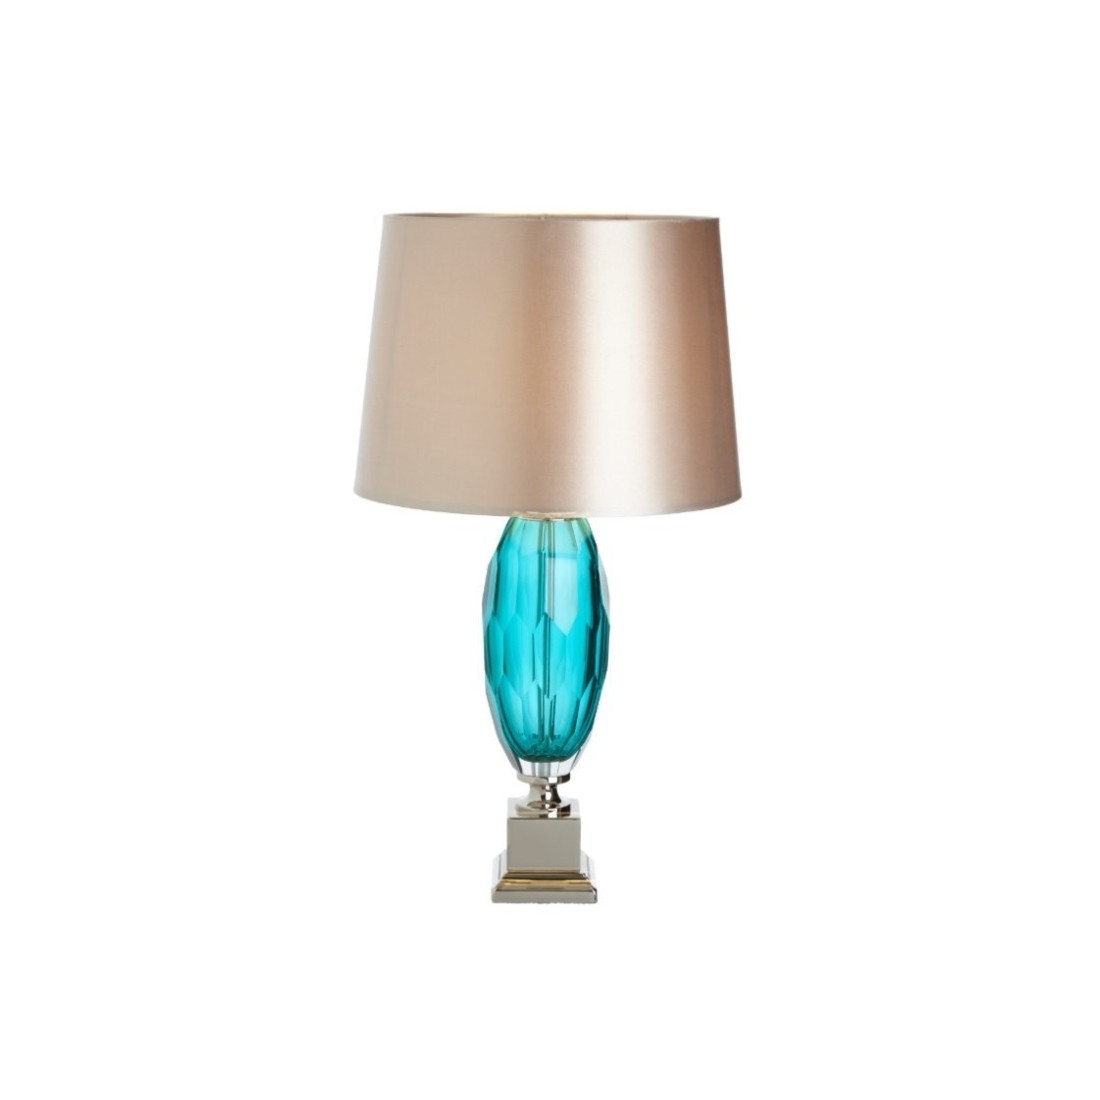 RV Astley - Alma Aqua Glass stolní lampa